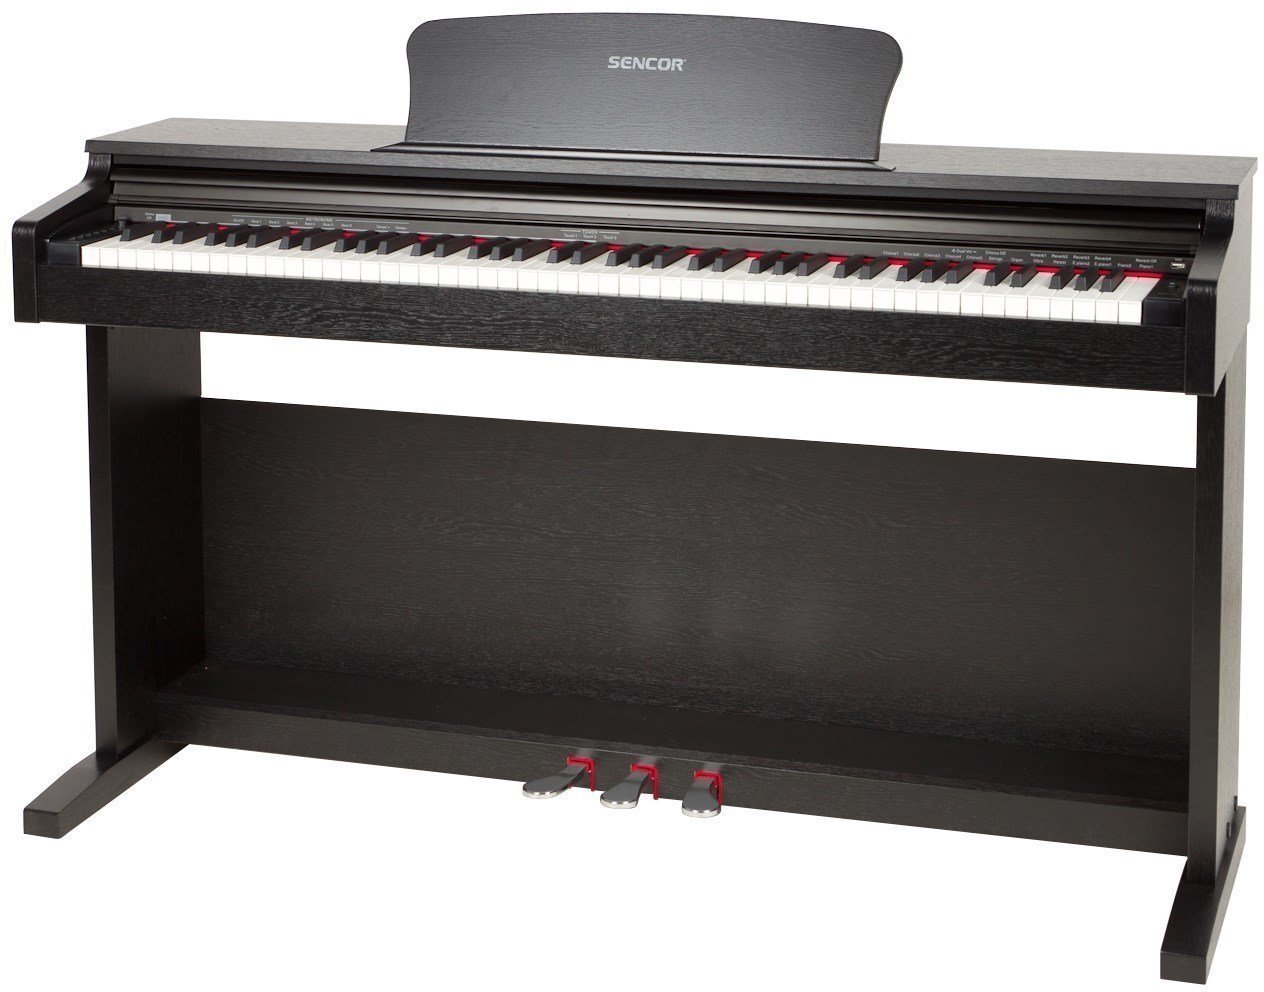 Digital Piano SENCOR SDP 100 Black Digital Piano